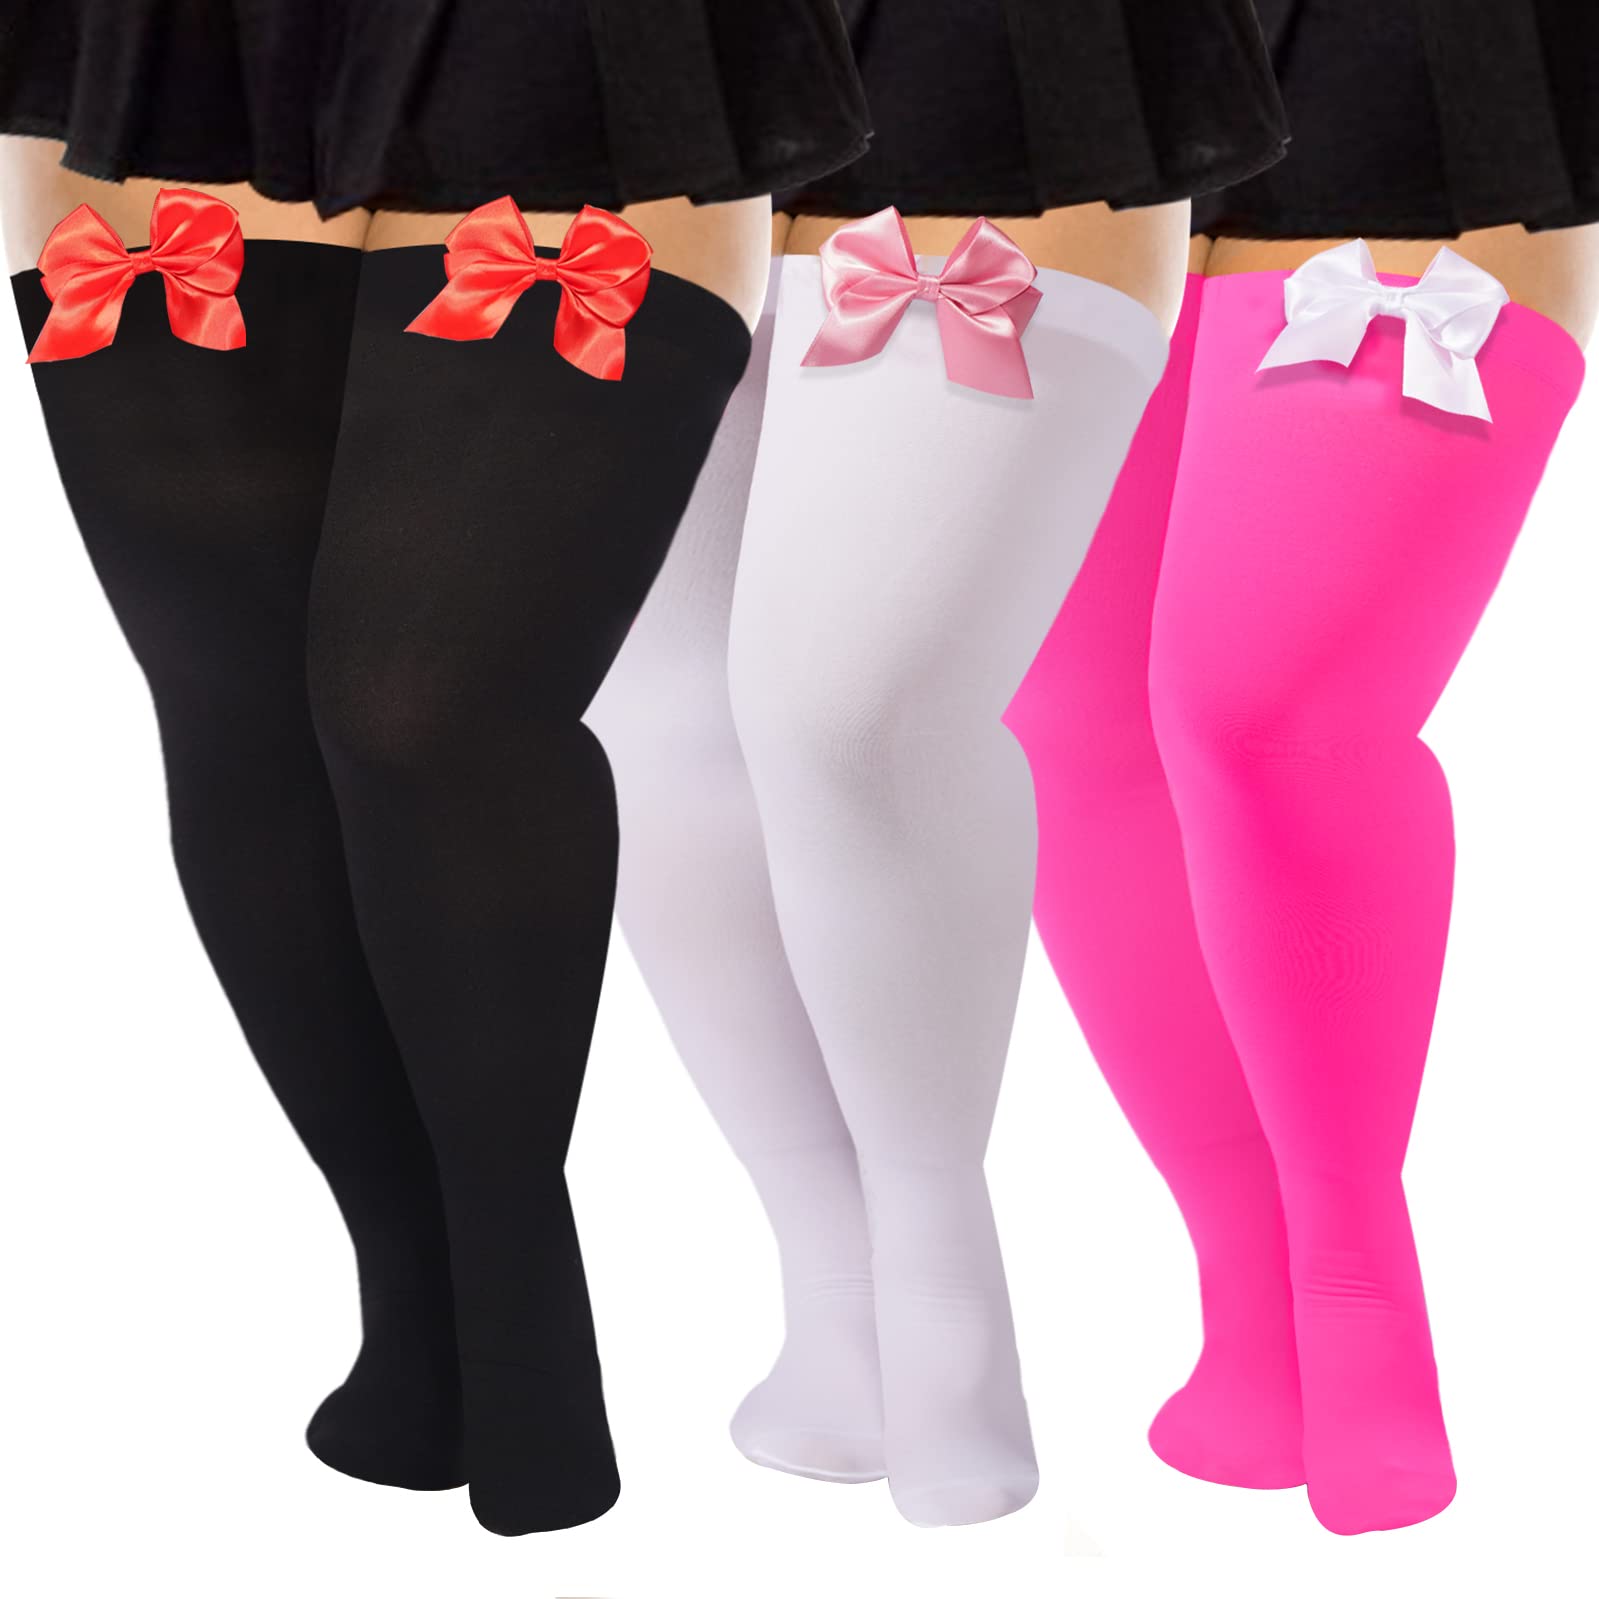  Pink Thigh High Stockings